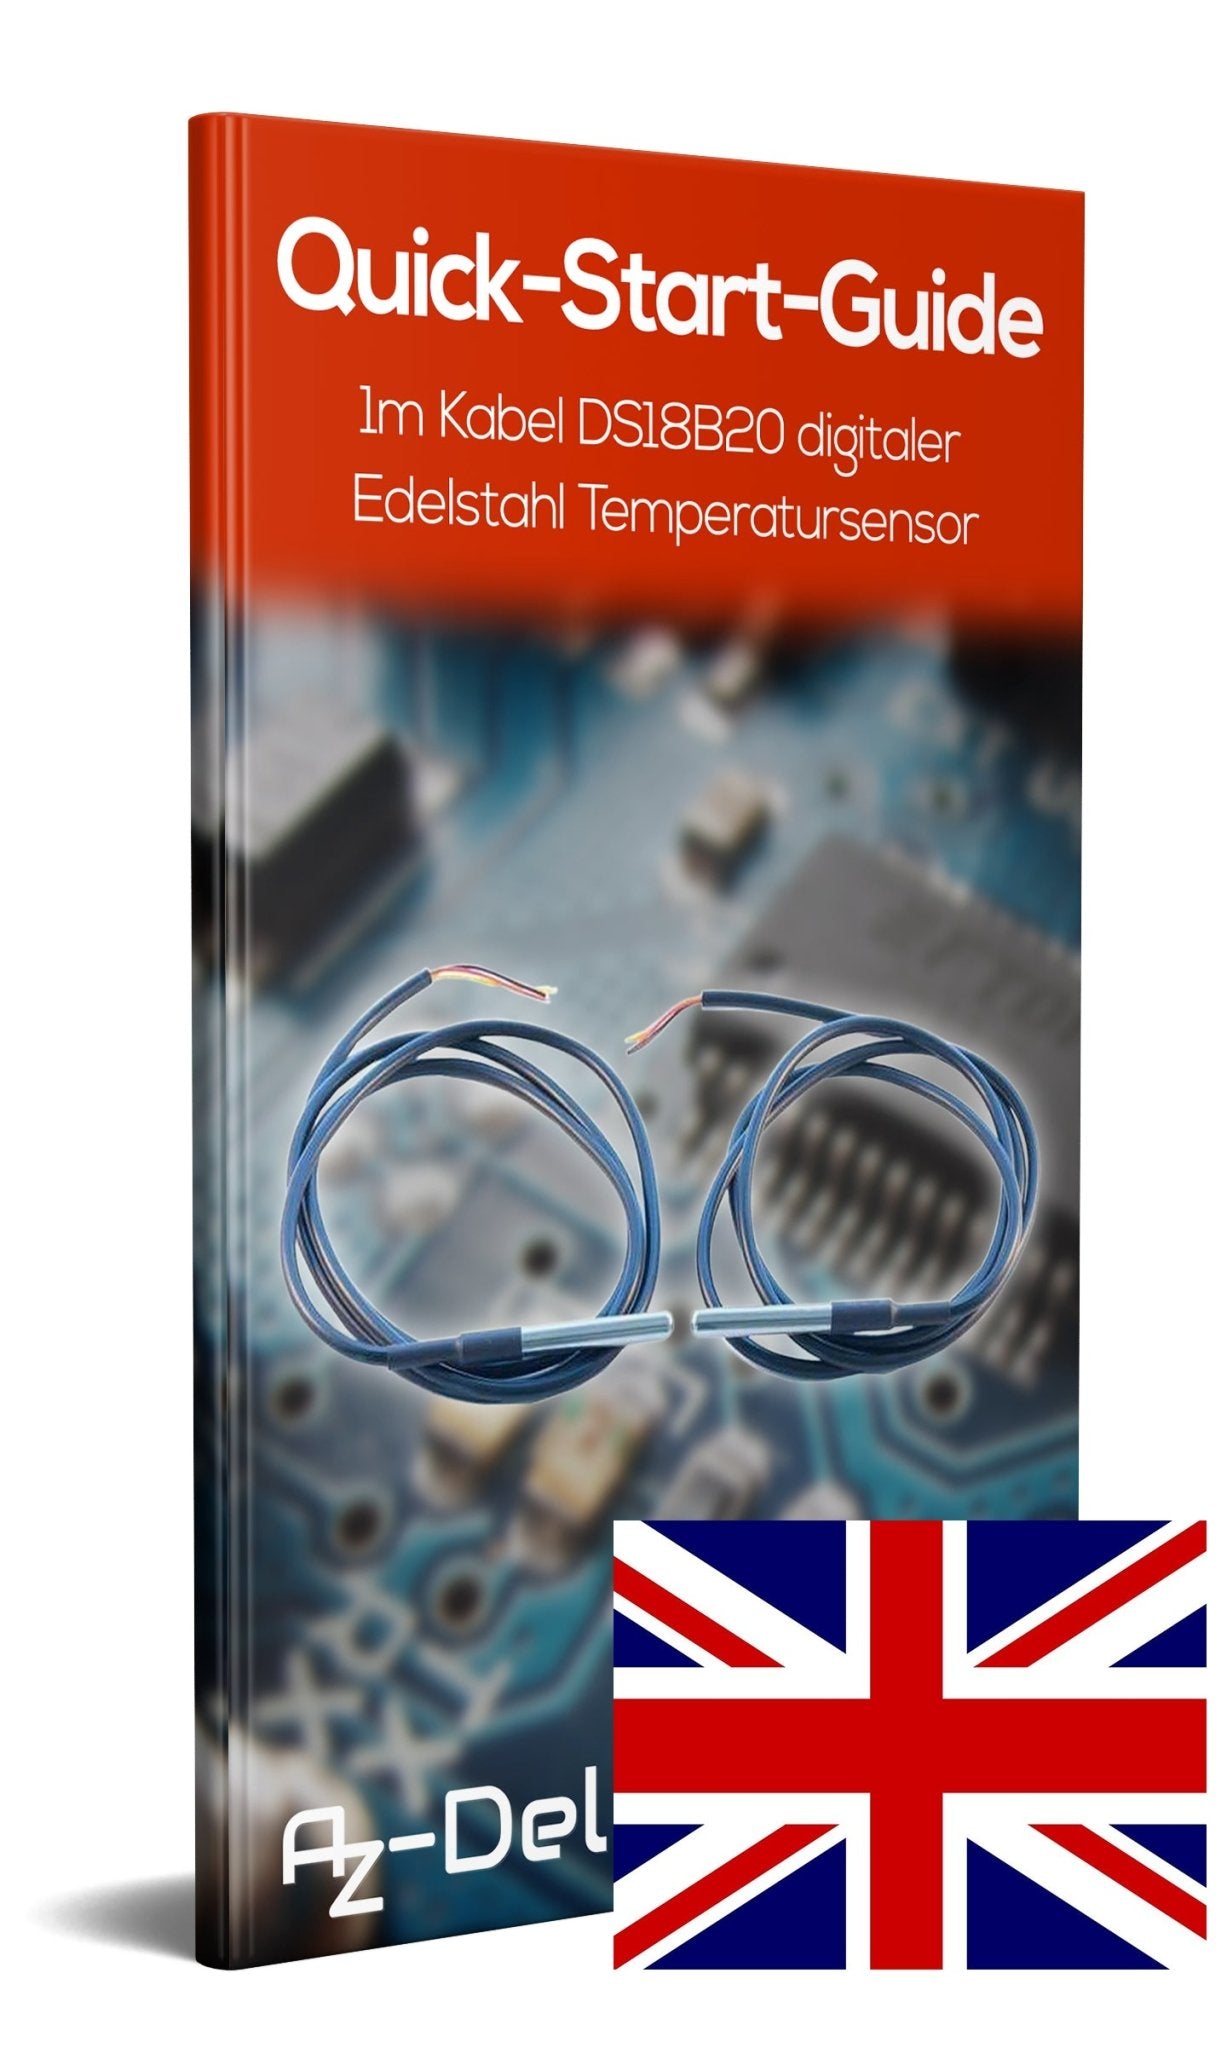 1M Kabel DS18B20 digitaler Edelstahl Temperatursensor Temperaturfühler, wasserdicht für Raspberry Pi